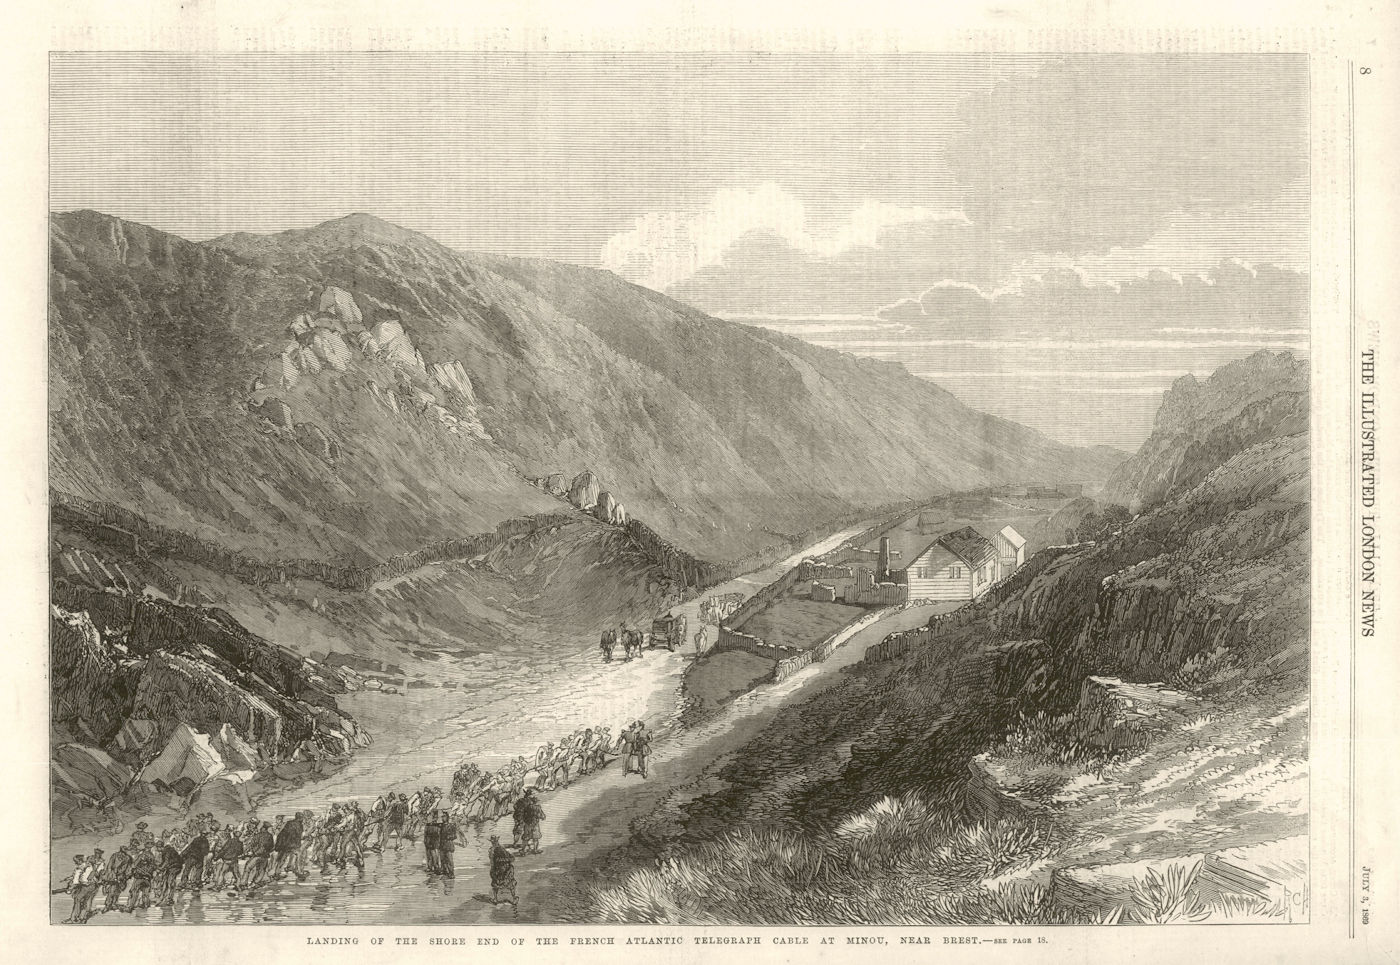 Landing the French Atlantic Telegraph Cable at Minou, near Brest. Finistère 1869